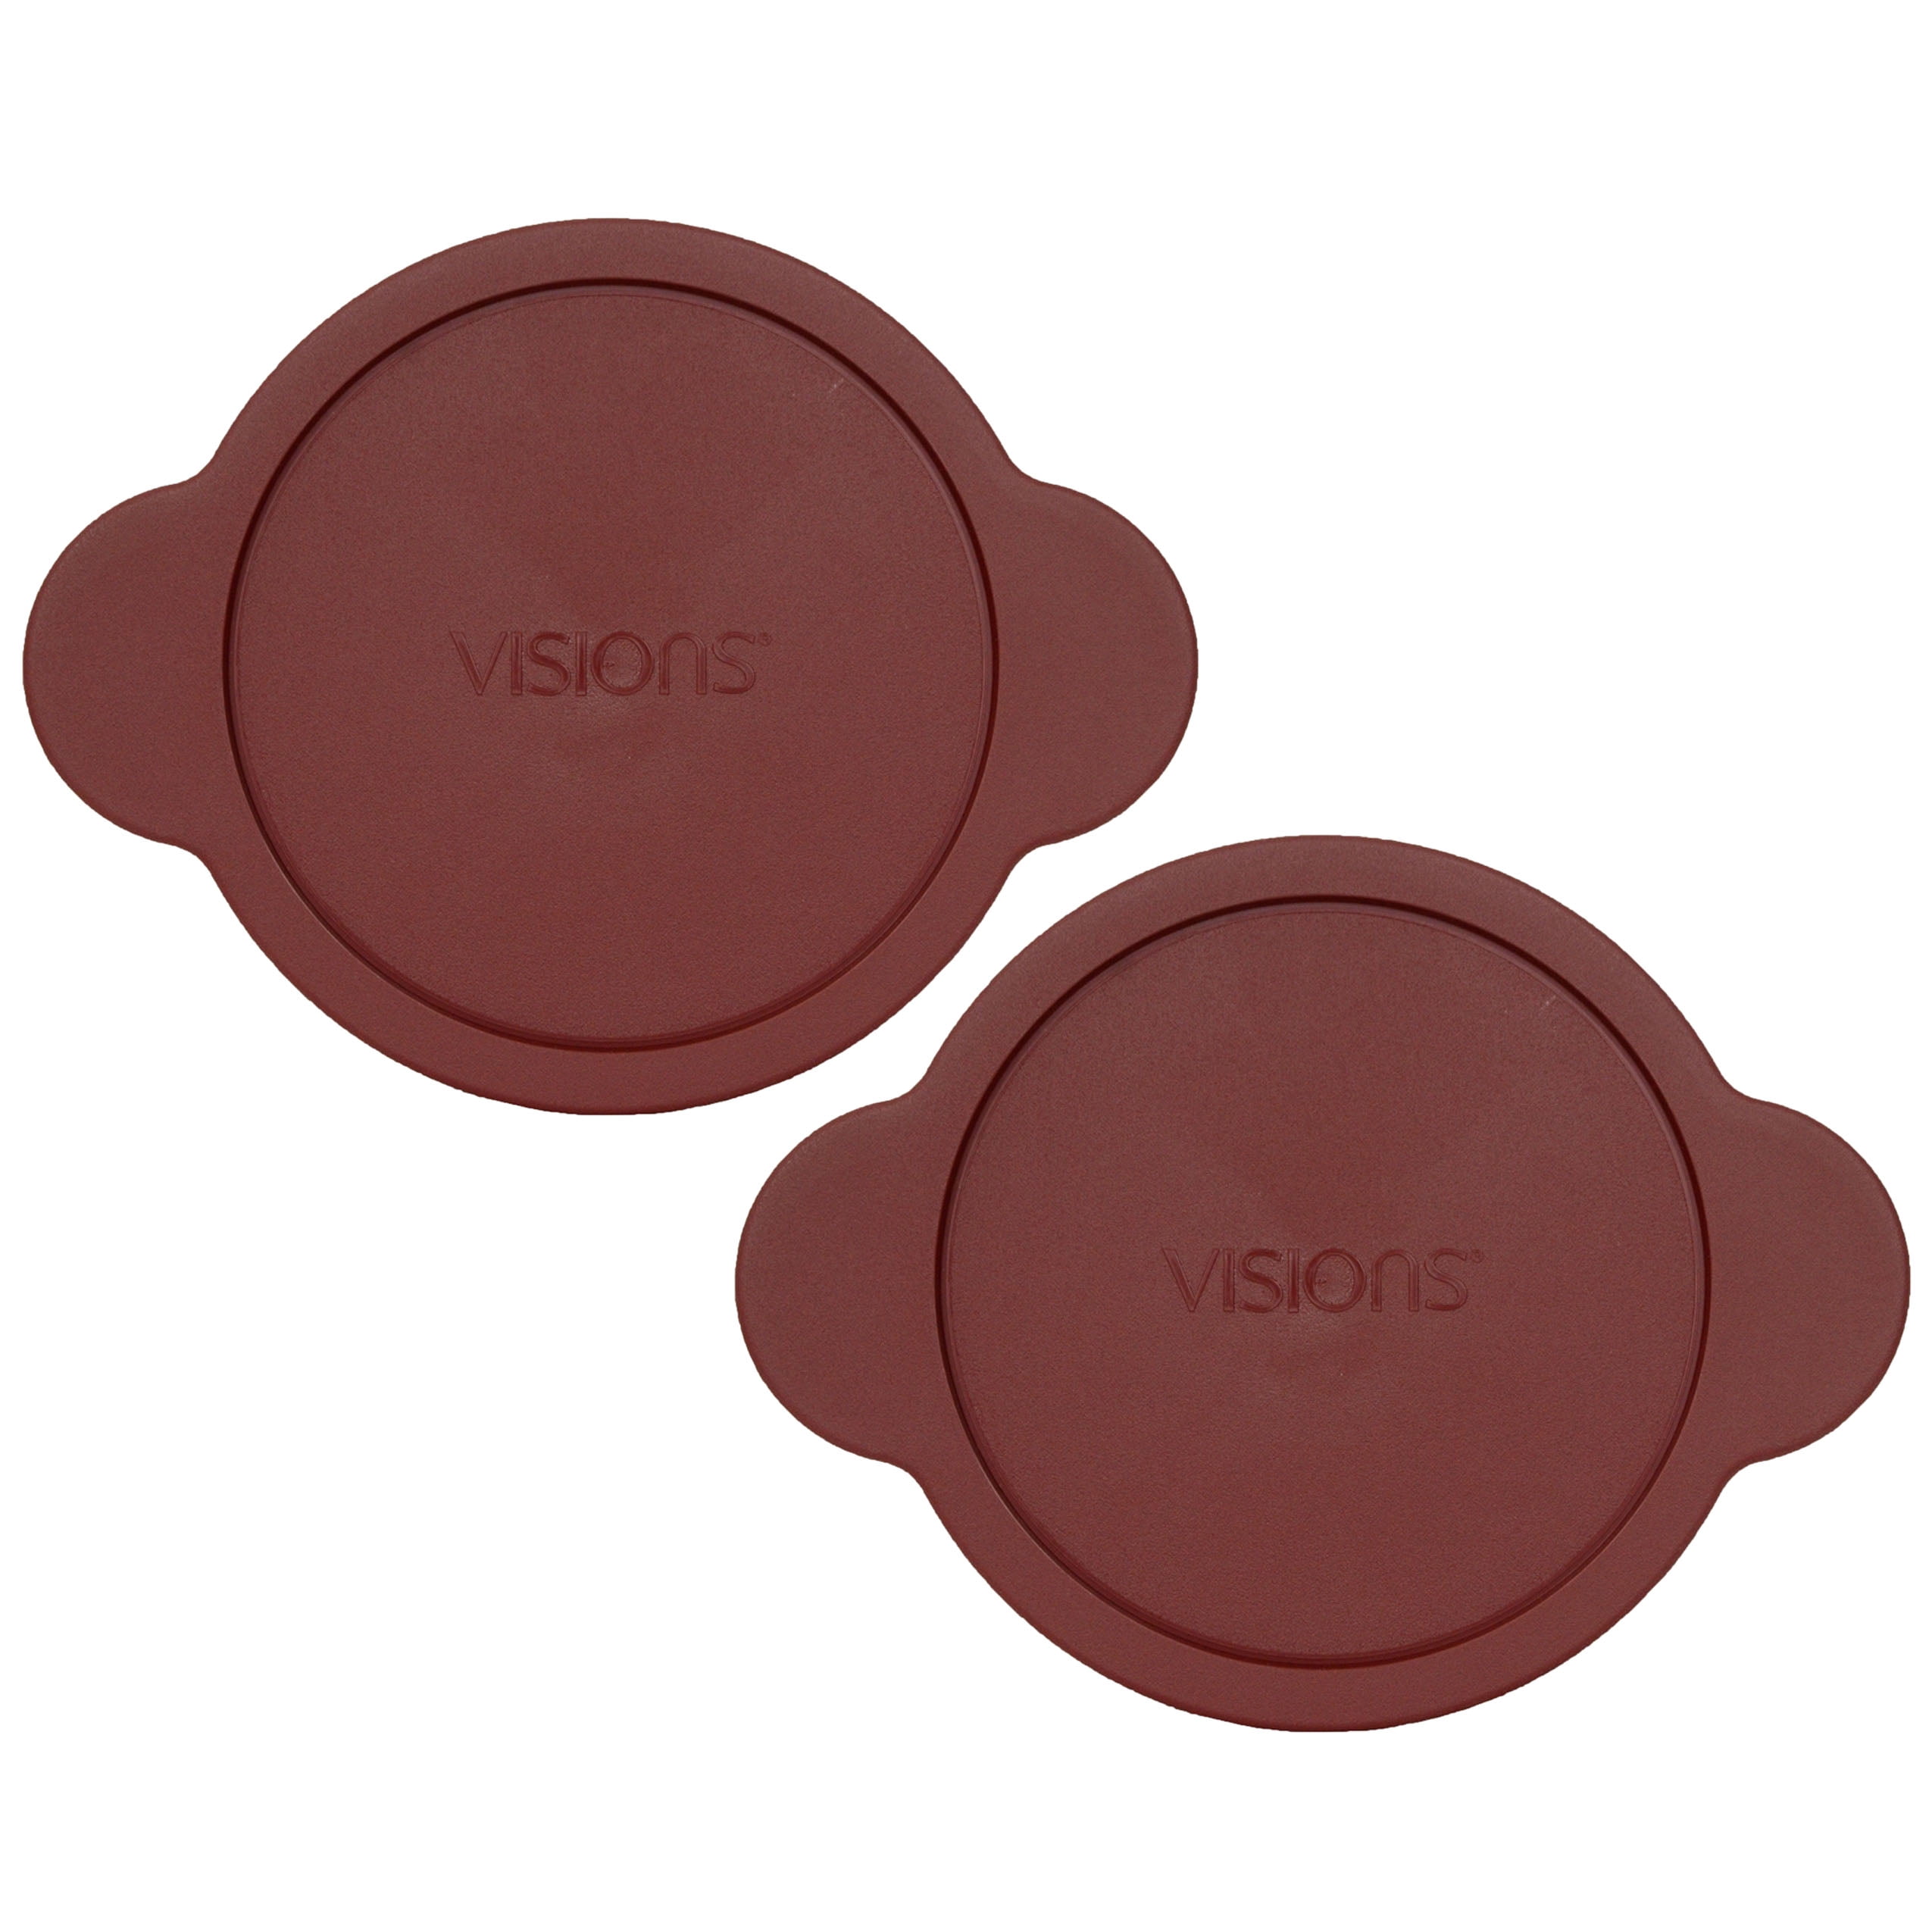 Visions 1.25L Heat Resistant Amber Round Glass Ceramics Kitchen